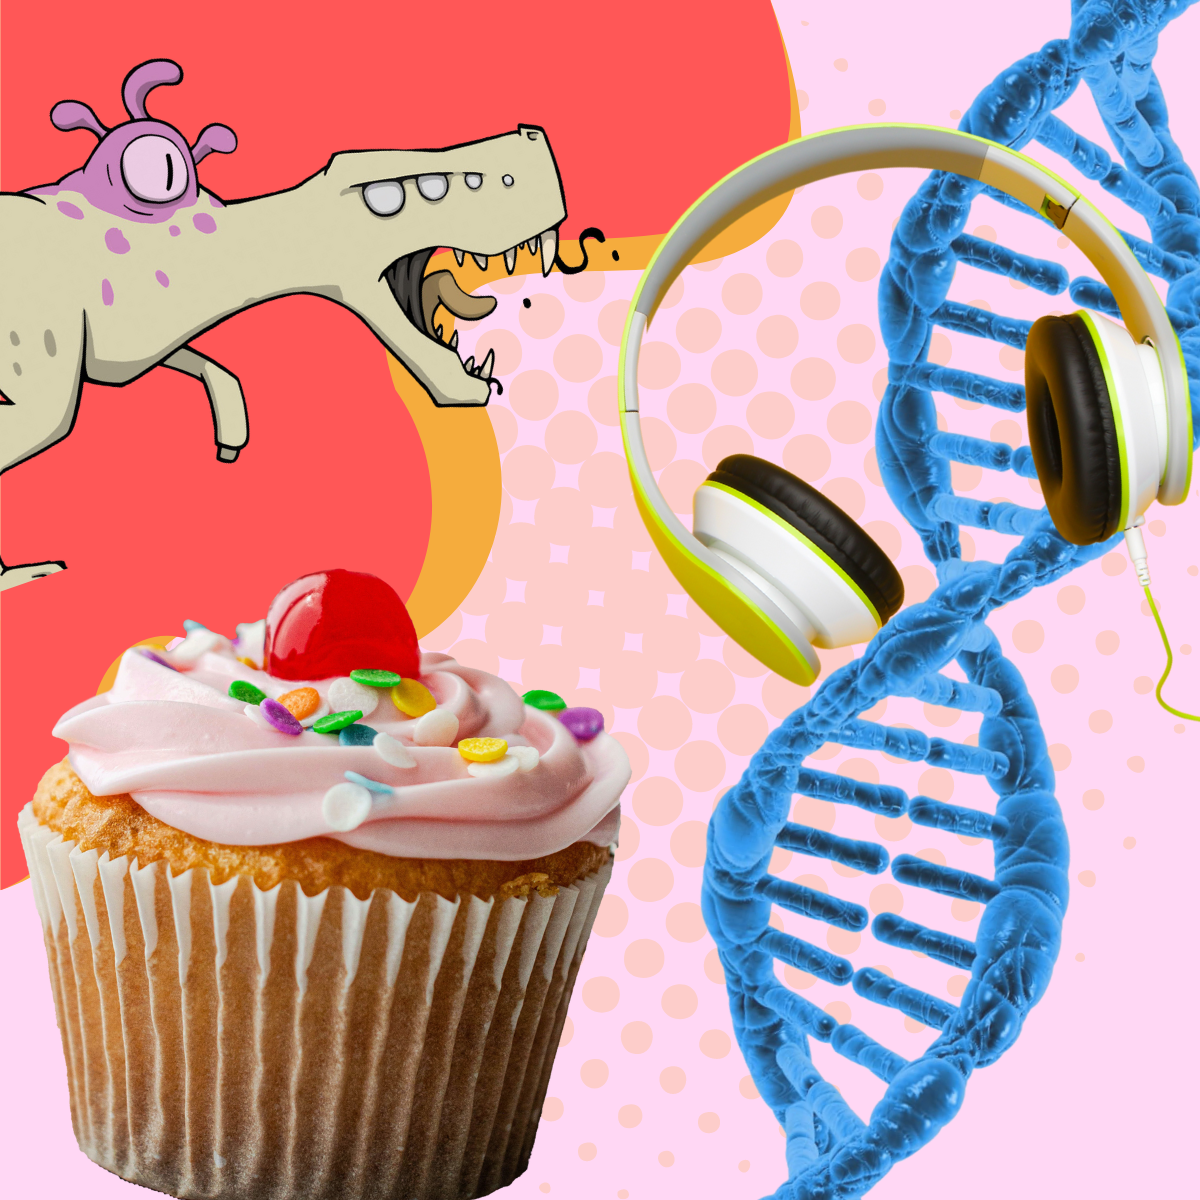 S6.08: Pop goes the genome! Genetics in popular culture